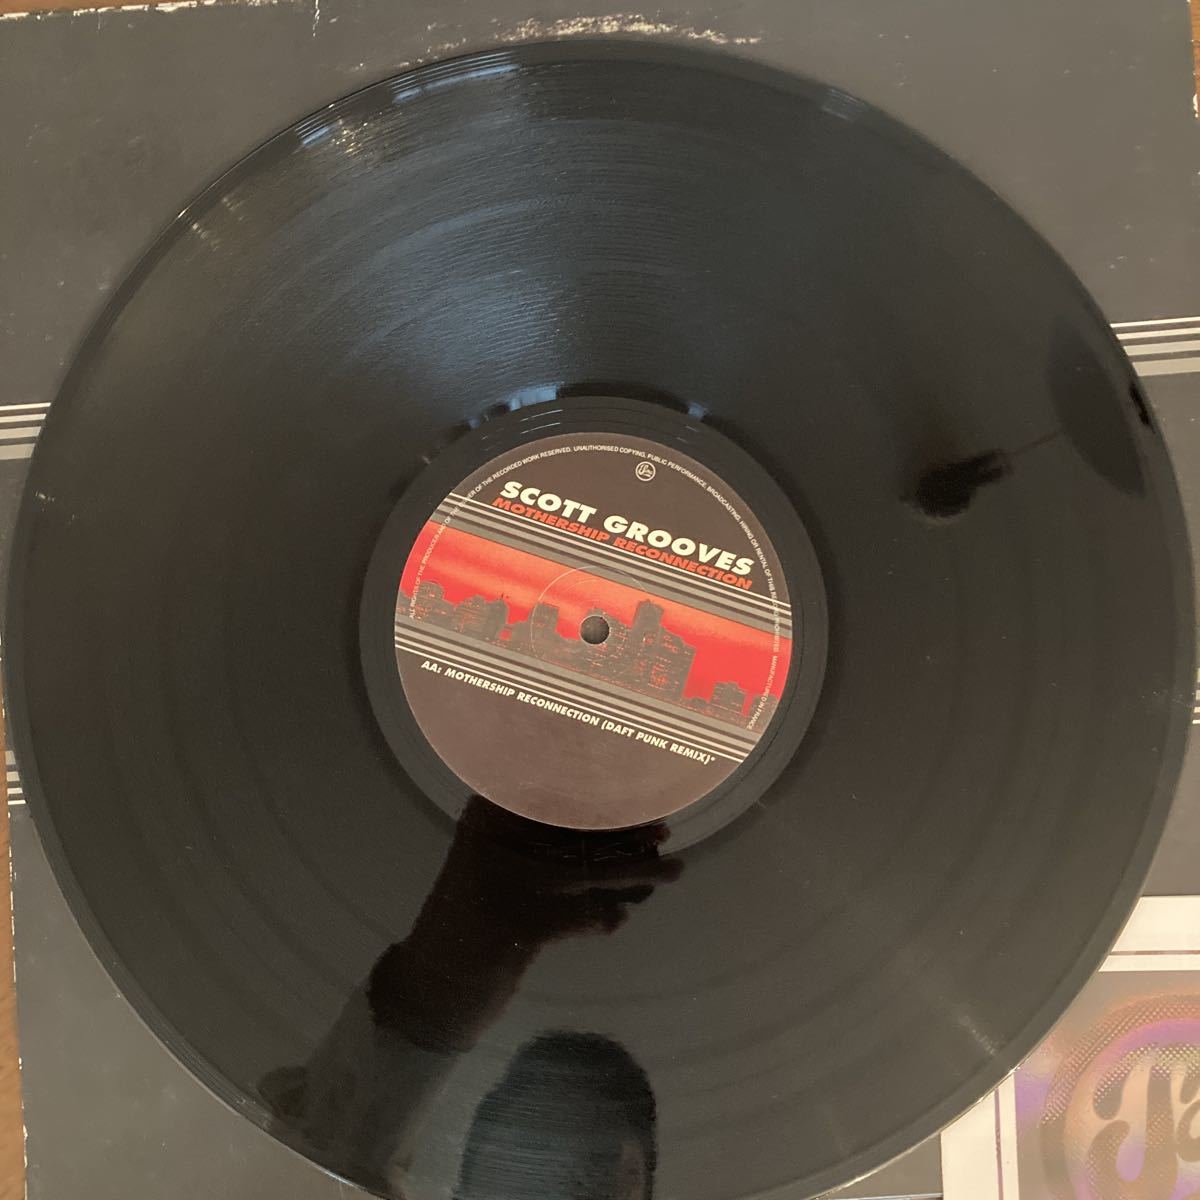 Scott Grooves Featuring Parliament / Funkadelic Mothership Reconnection (Daft Punk Remix) /12/レコード